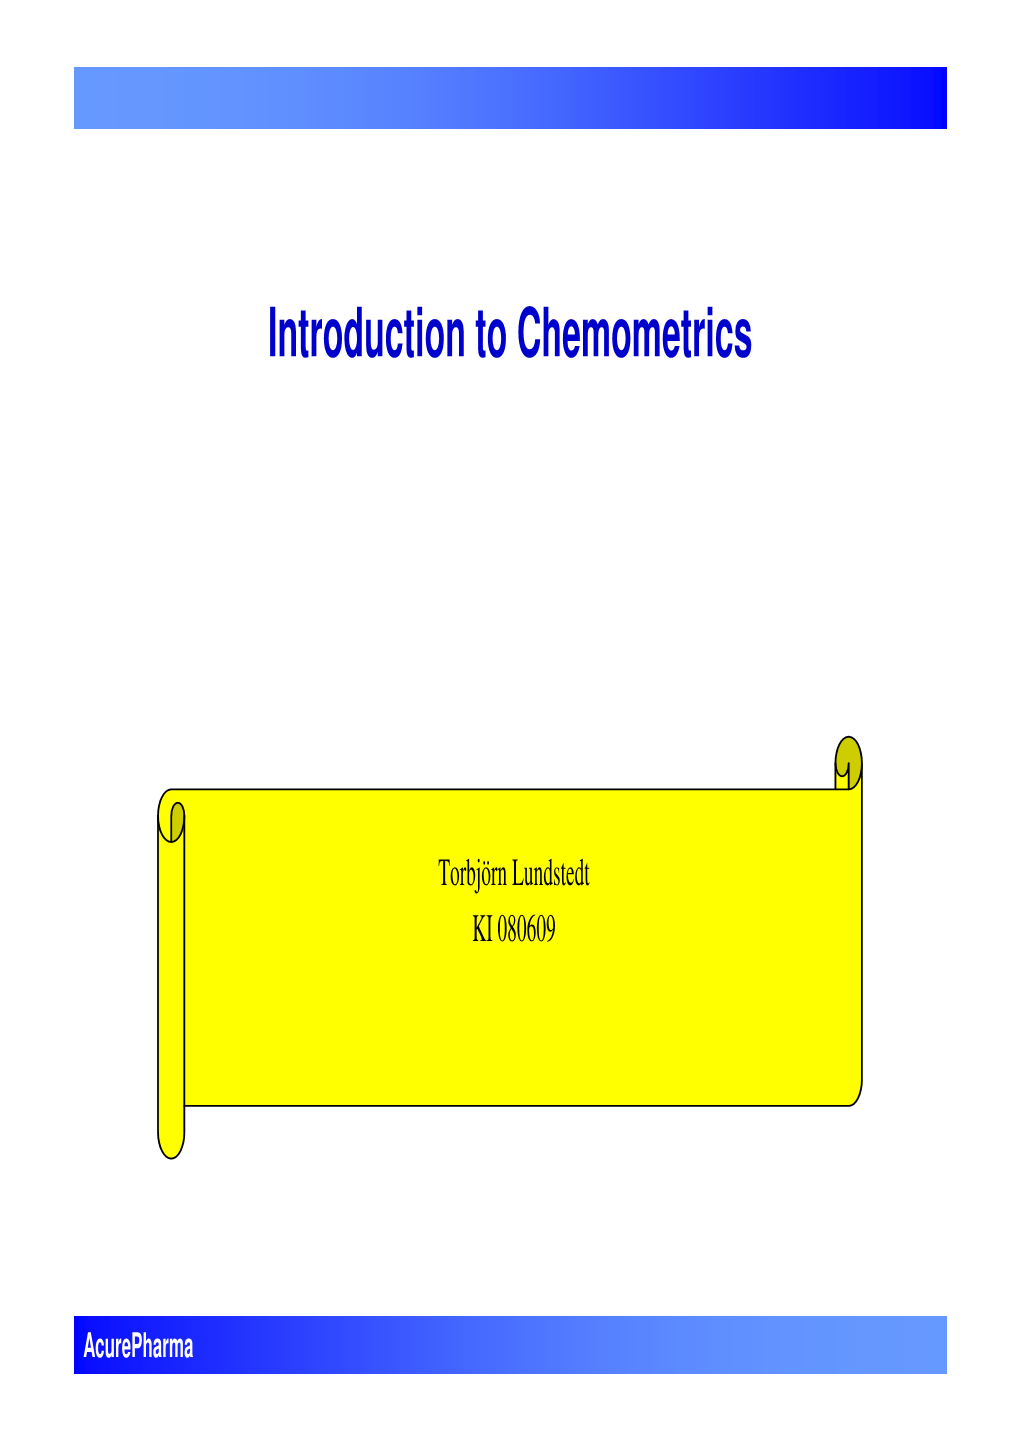 Introduction to Chemometrics